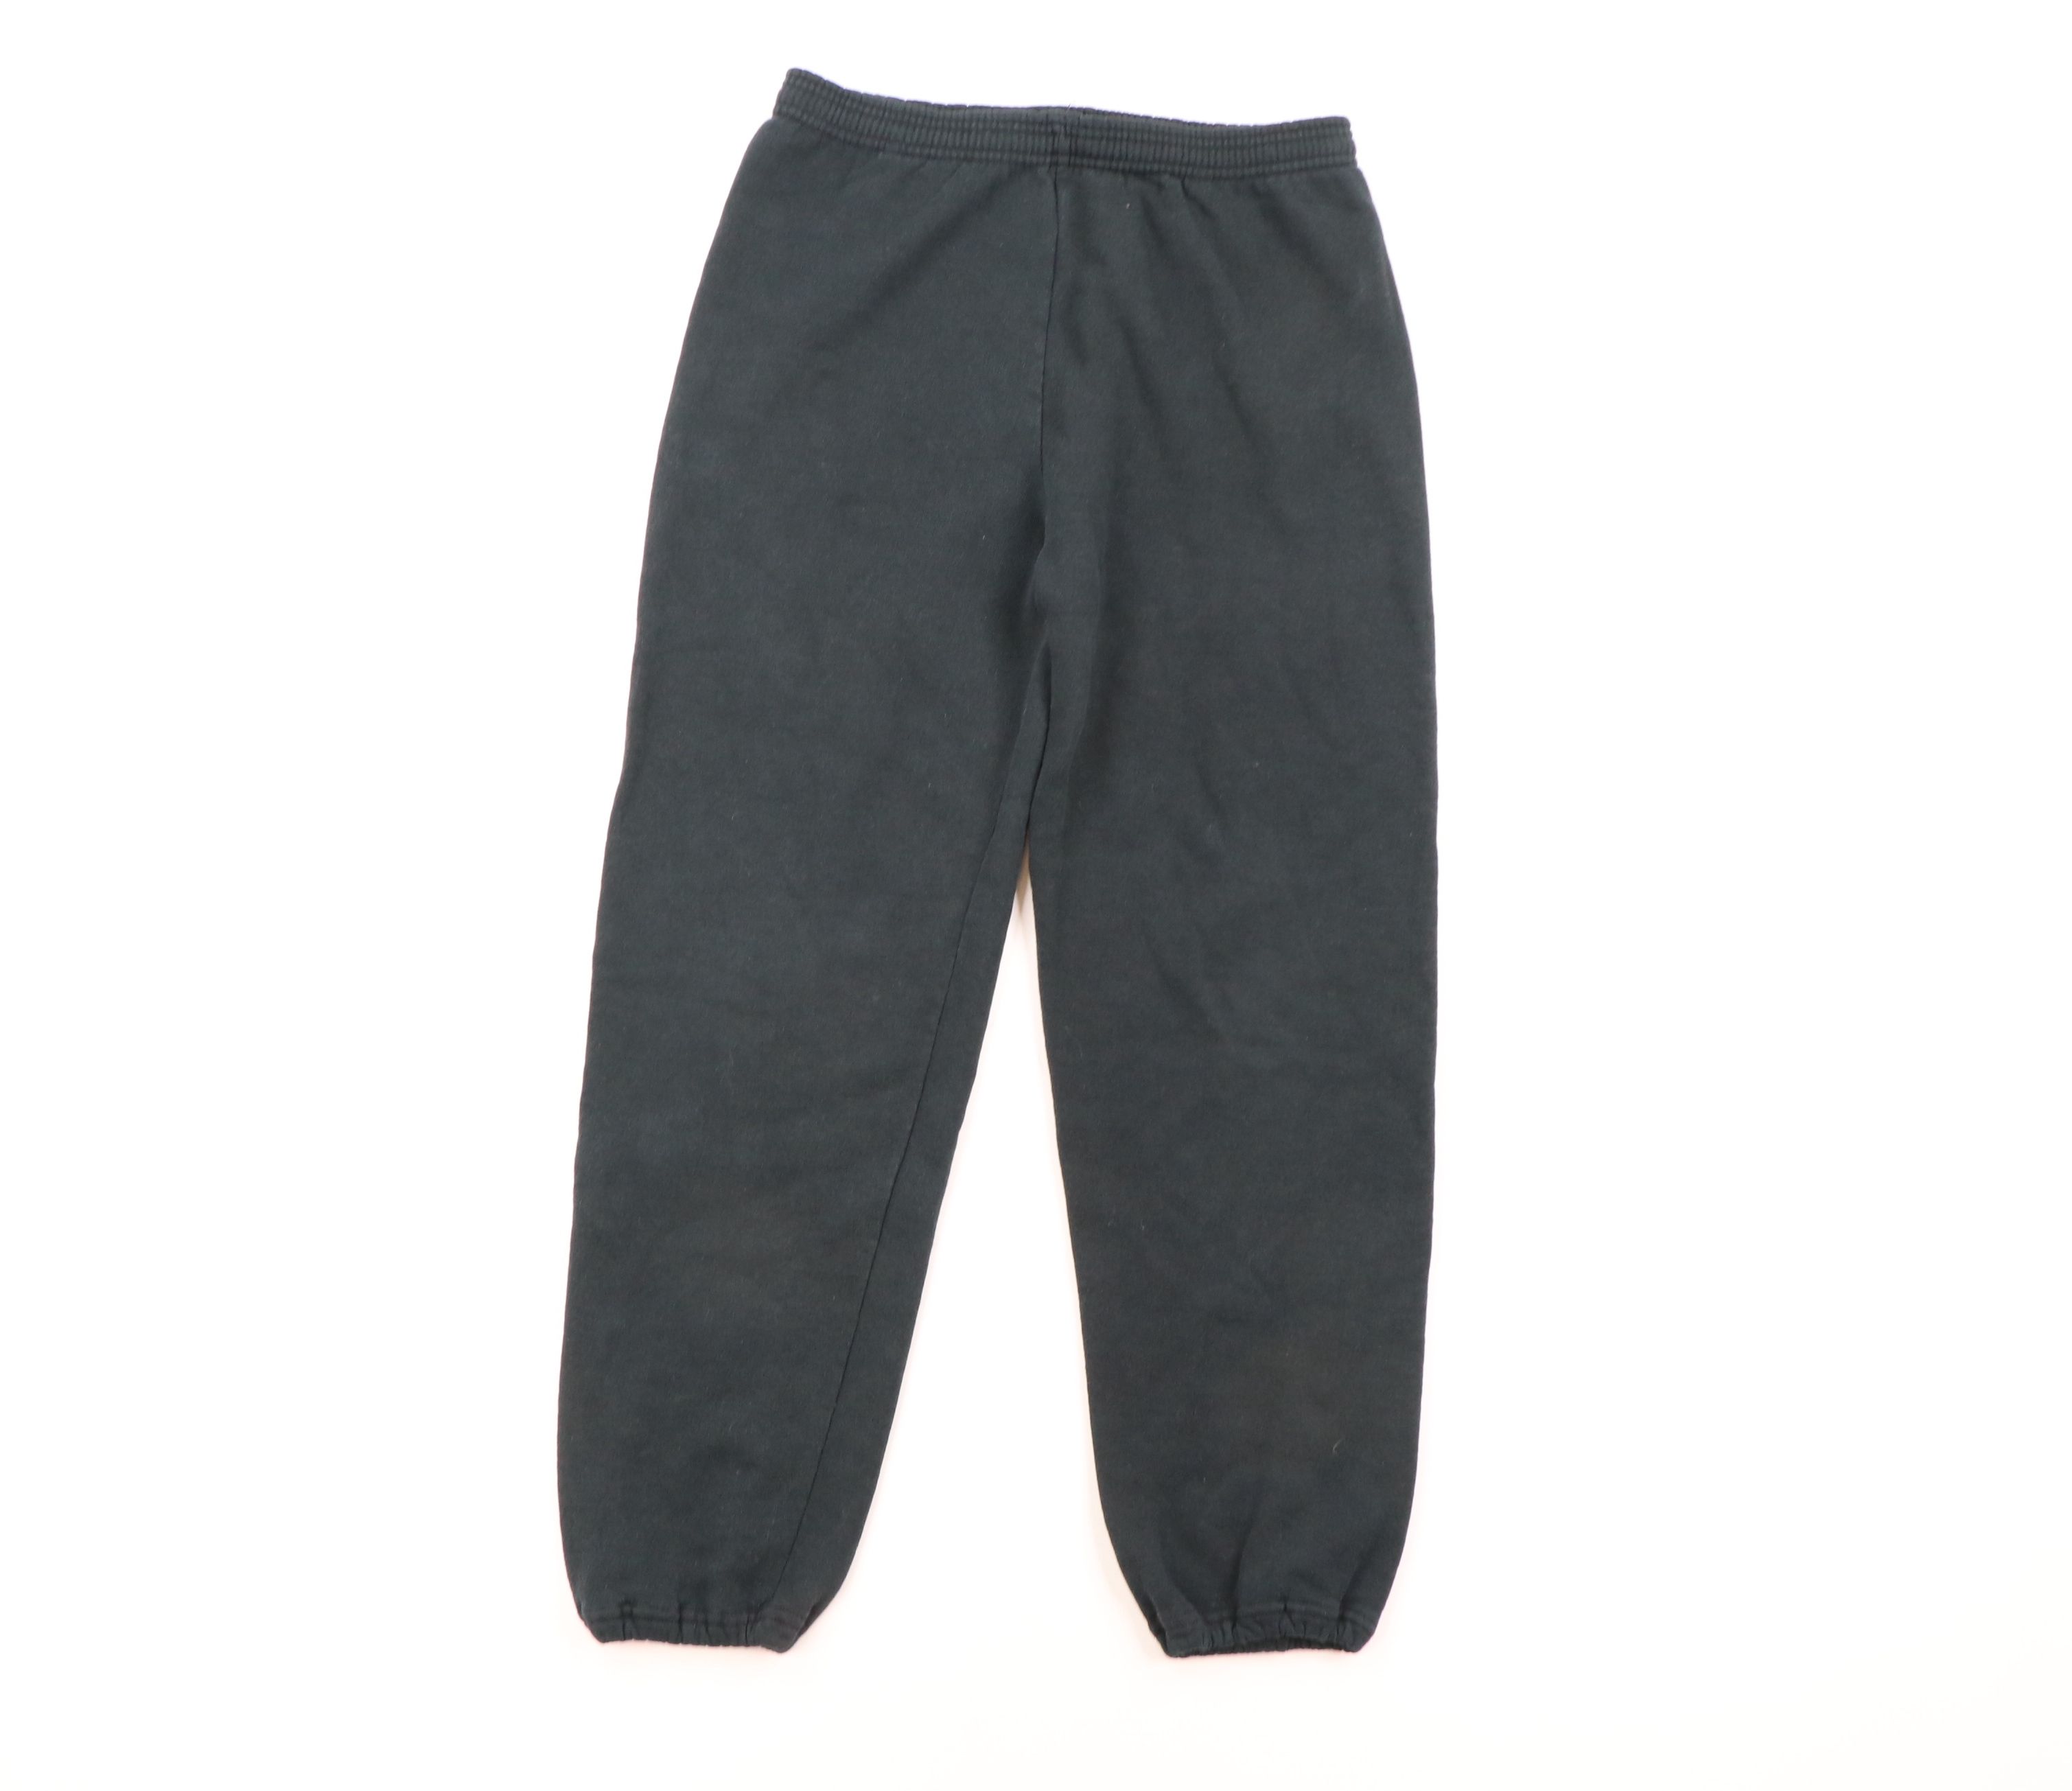 Vintage Vintage 90s Streetwear Faded Blank Sweatpants Joggers Pants Size US 36 / EU 52 - 1 Preview